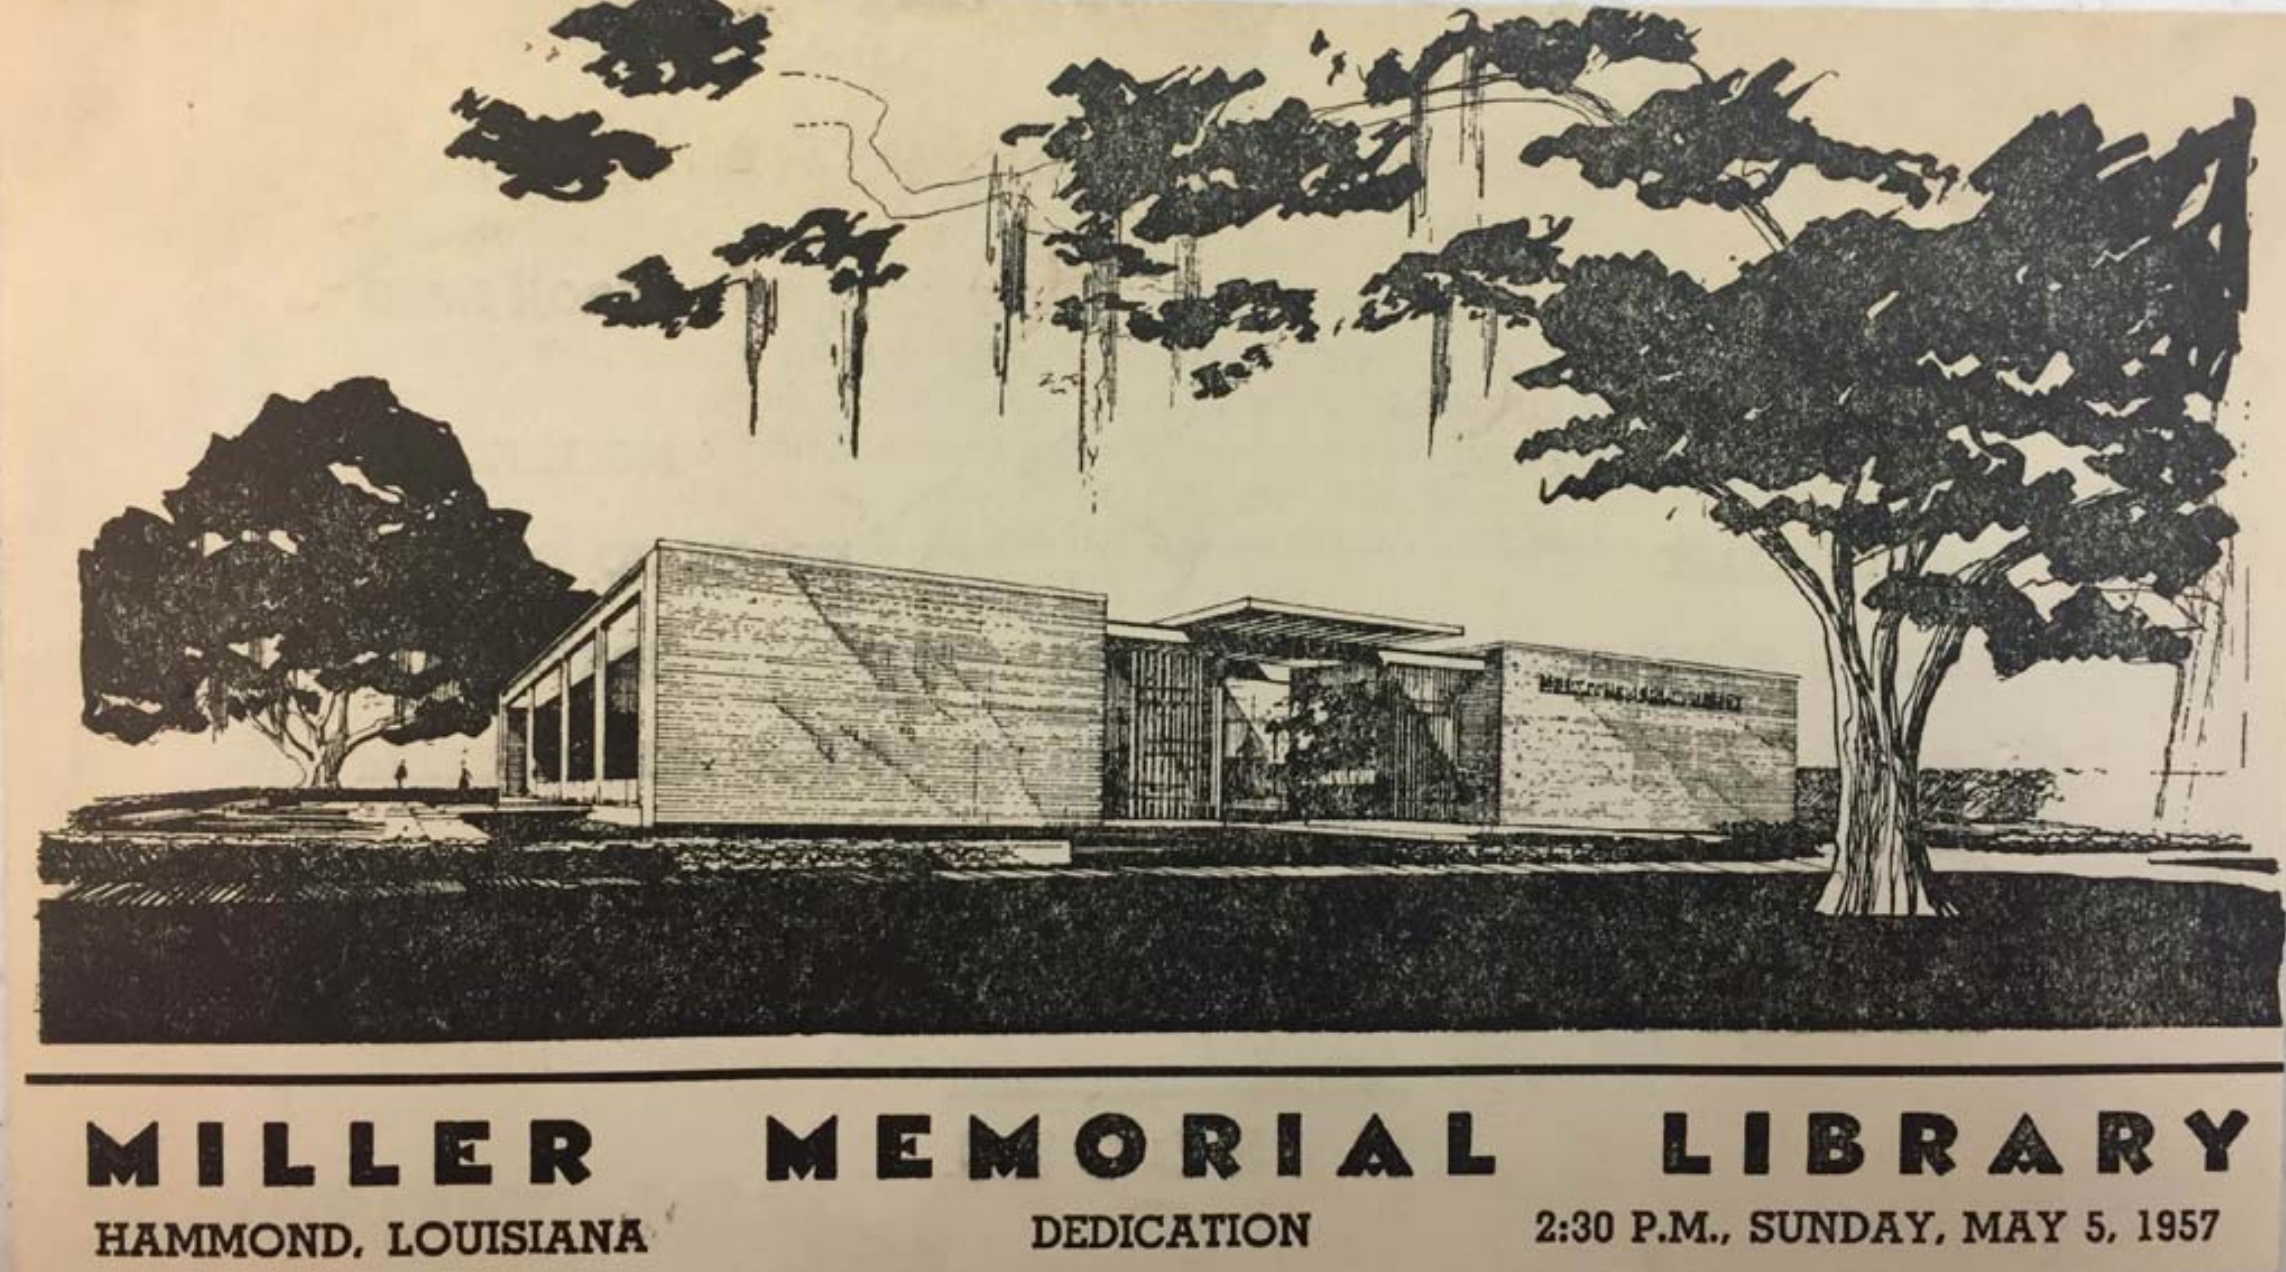 LIBRARY_Desmond_Miller Memorial Library Rendering 1957.png